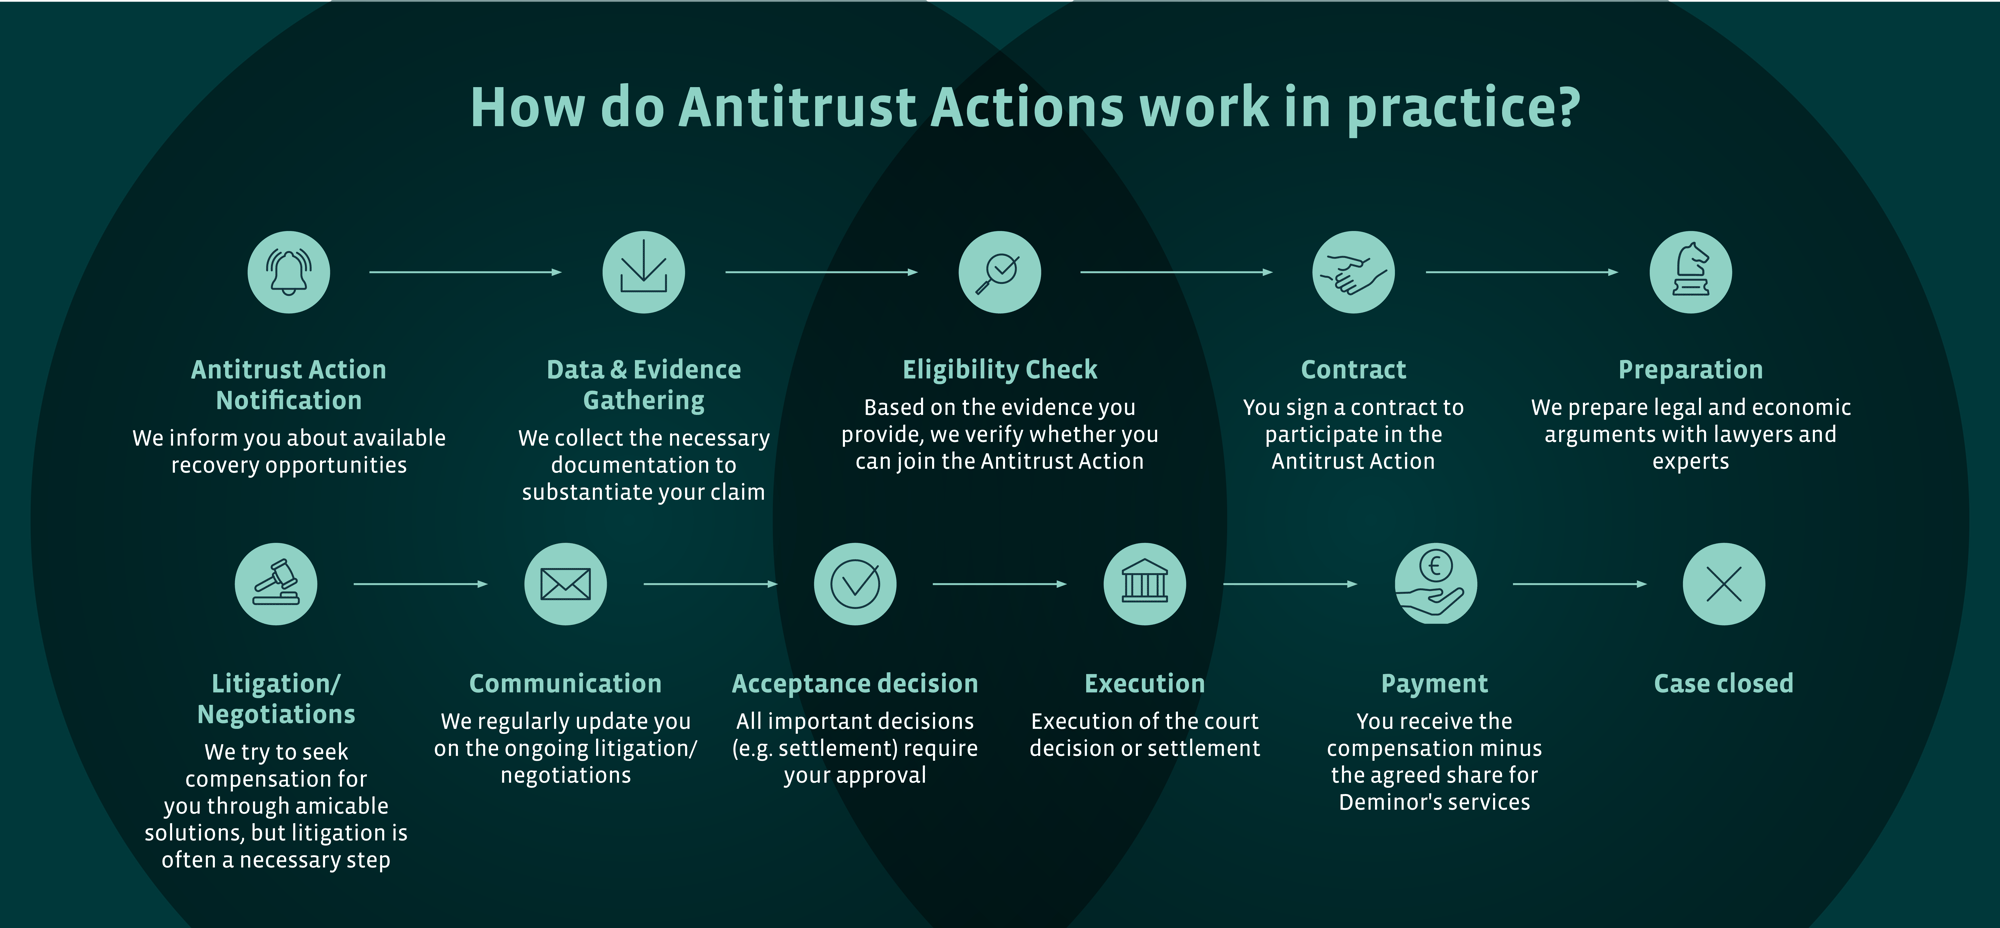 DEM-Antitrust Actions presentation - HOW THEY WORK